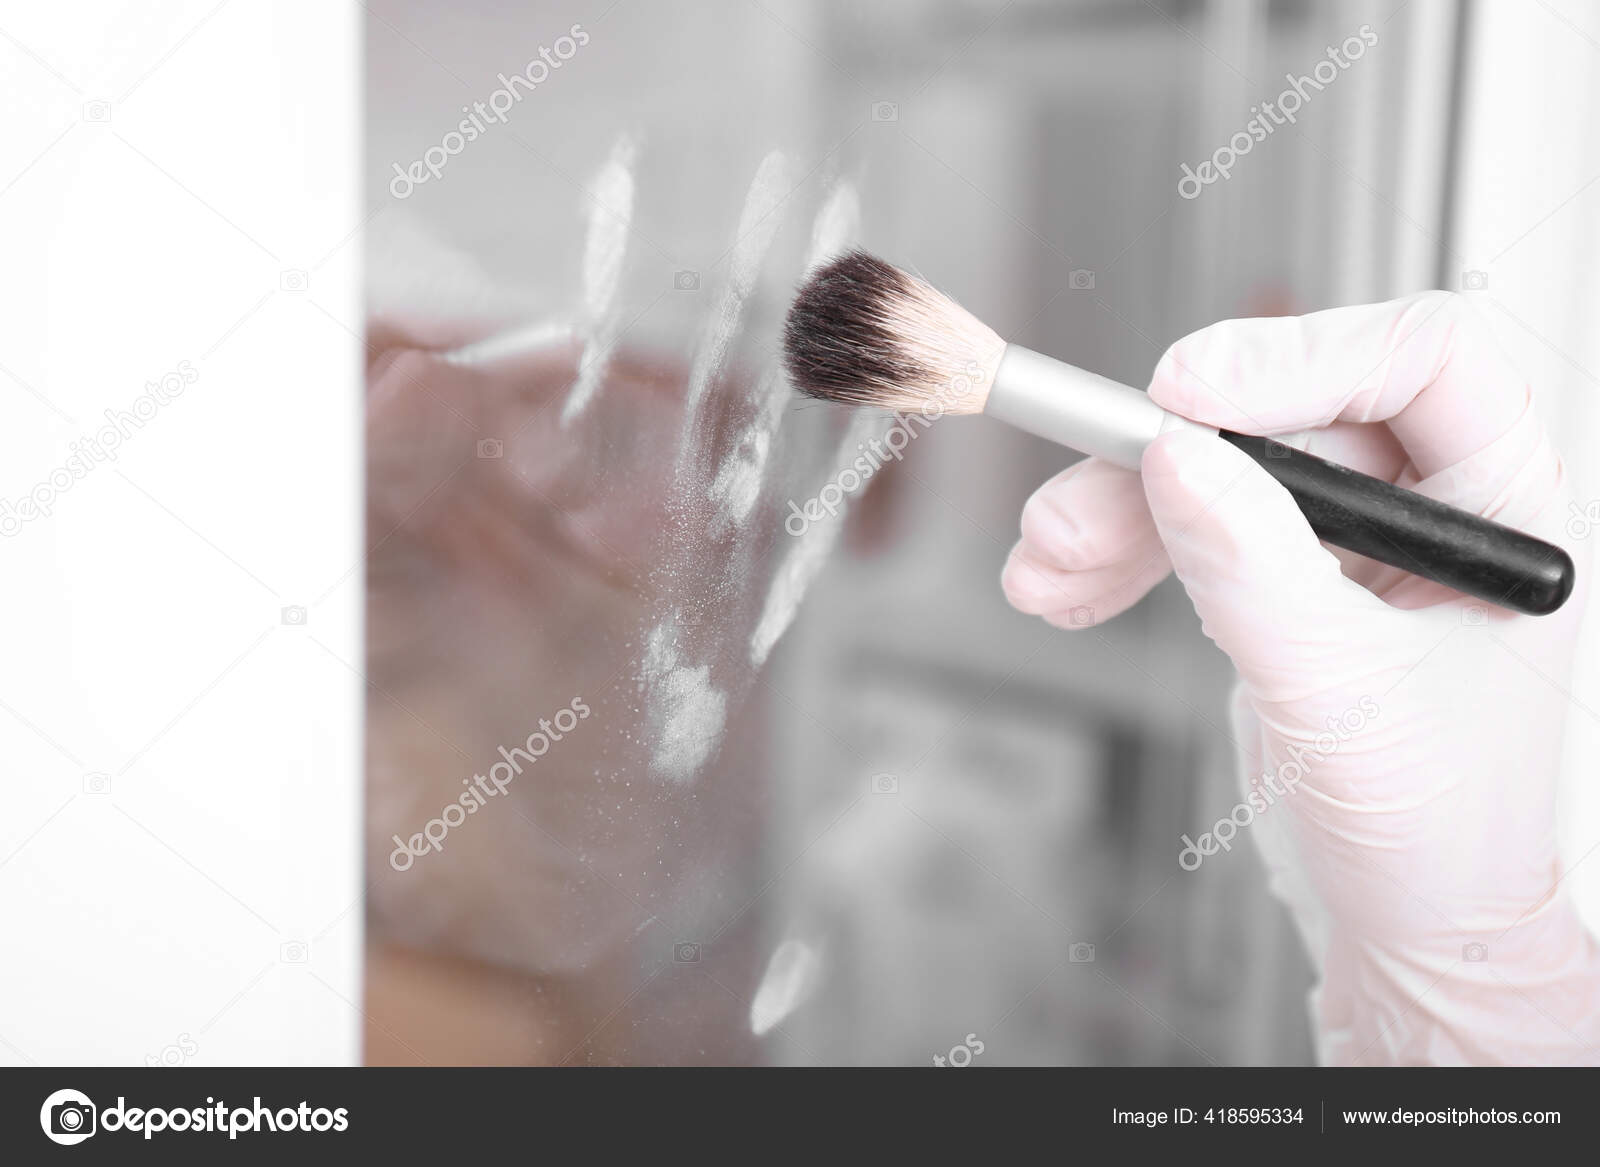 https://st4.depositphotos.com/16122460/41859/i/1600/depositphotos_418595334-stock-photo-detective-using-brush-powder-reveal.jpg